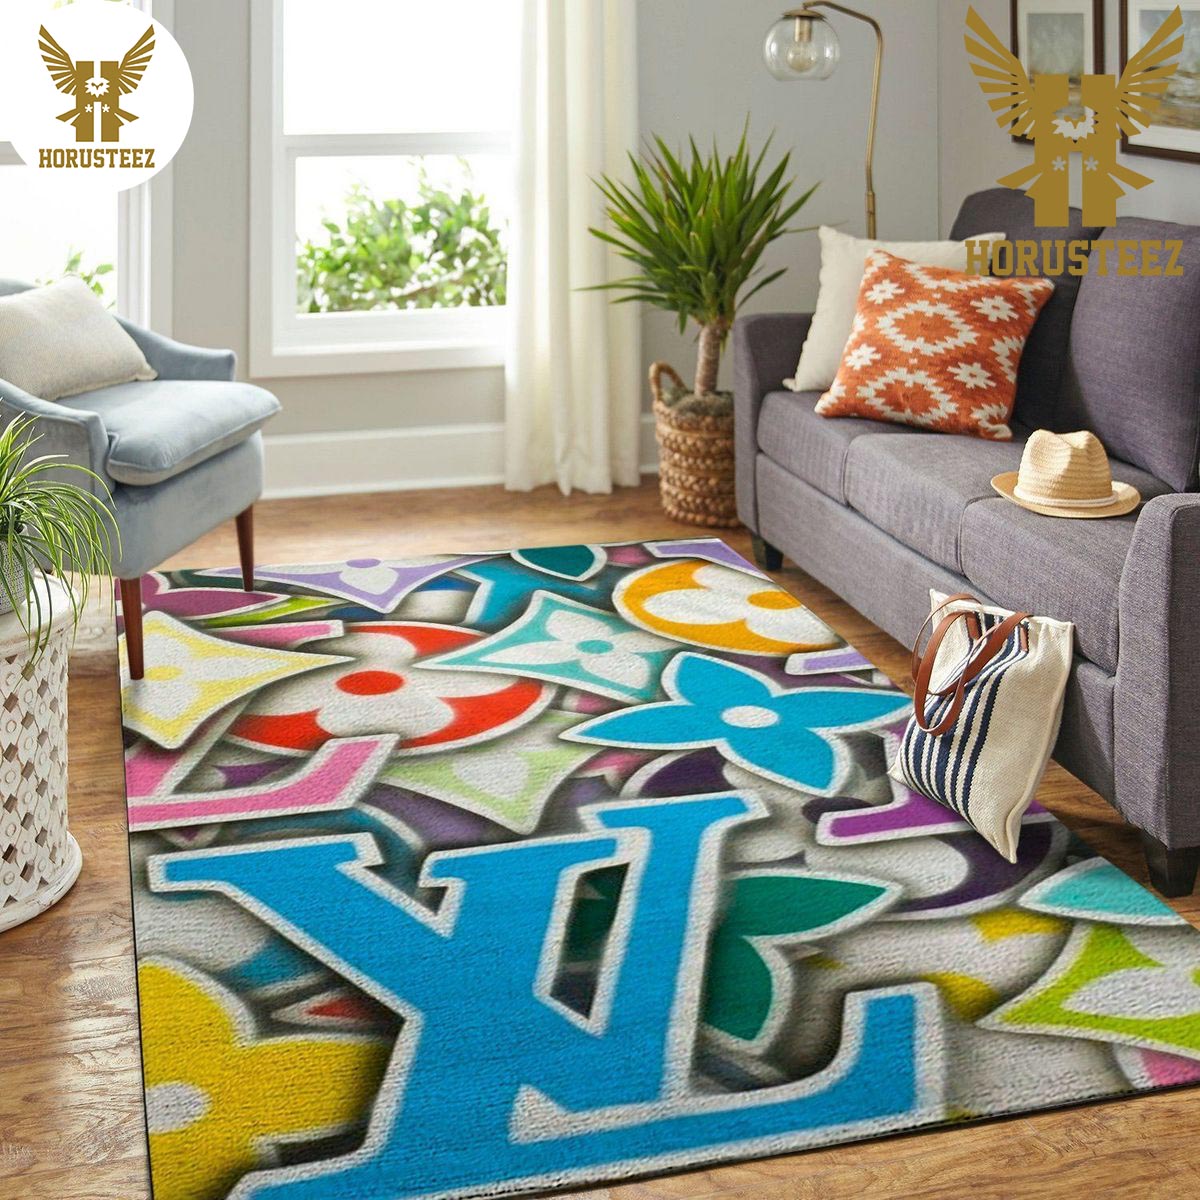 Louis Vuitton Area Rug Colorful Hypebeast Fashion Luxury Brand Living Room Carpet Floor Decor